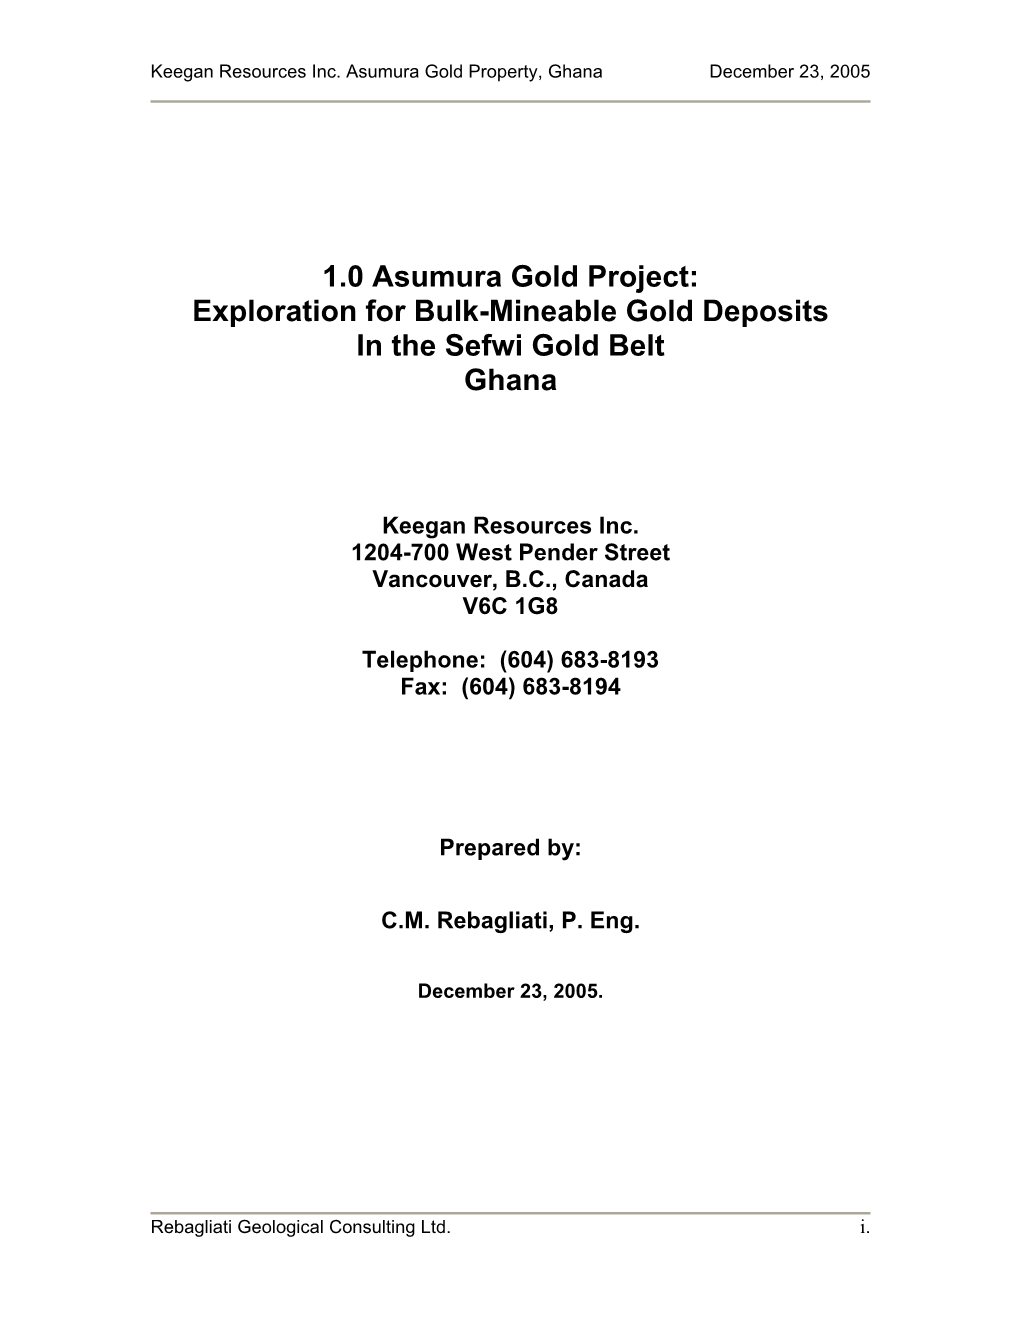 Regent Gold Project